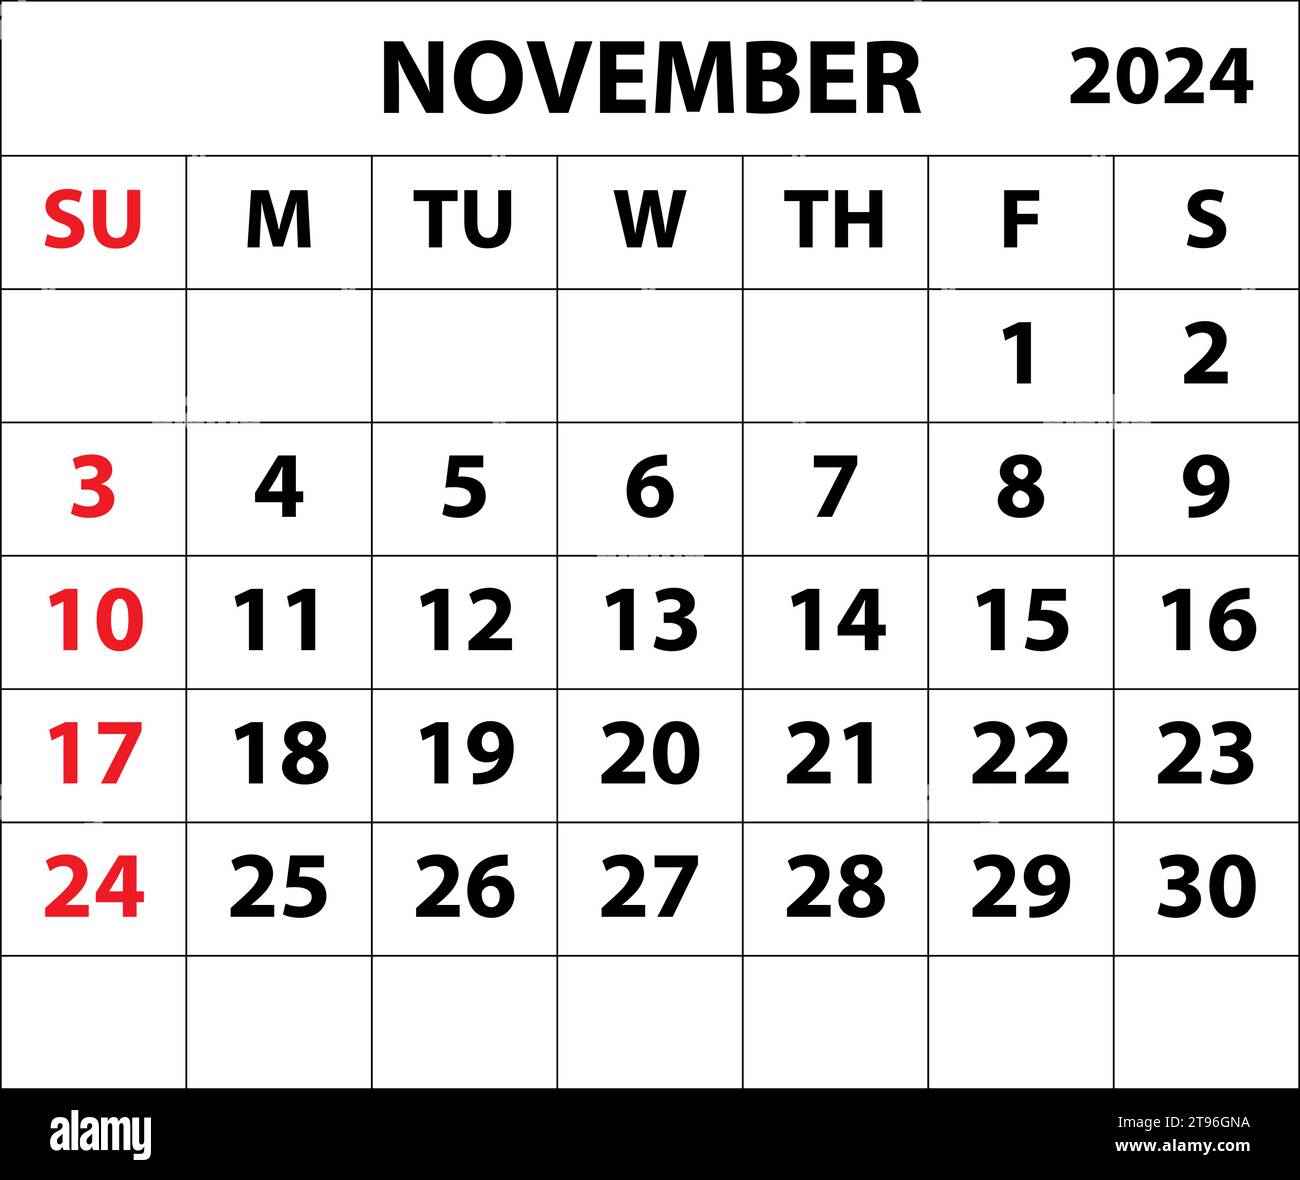 Calendar 2024 Immagini Vettoriali Stock - Alamy